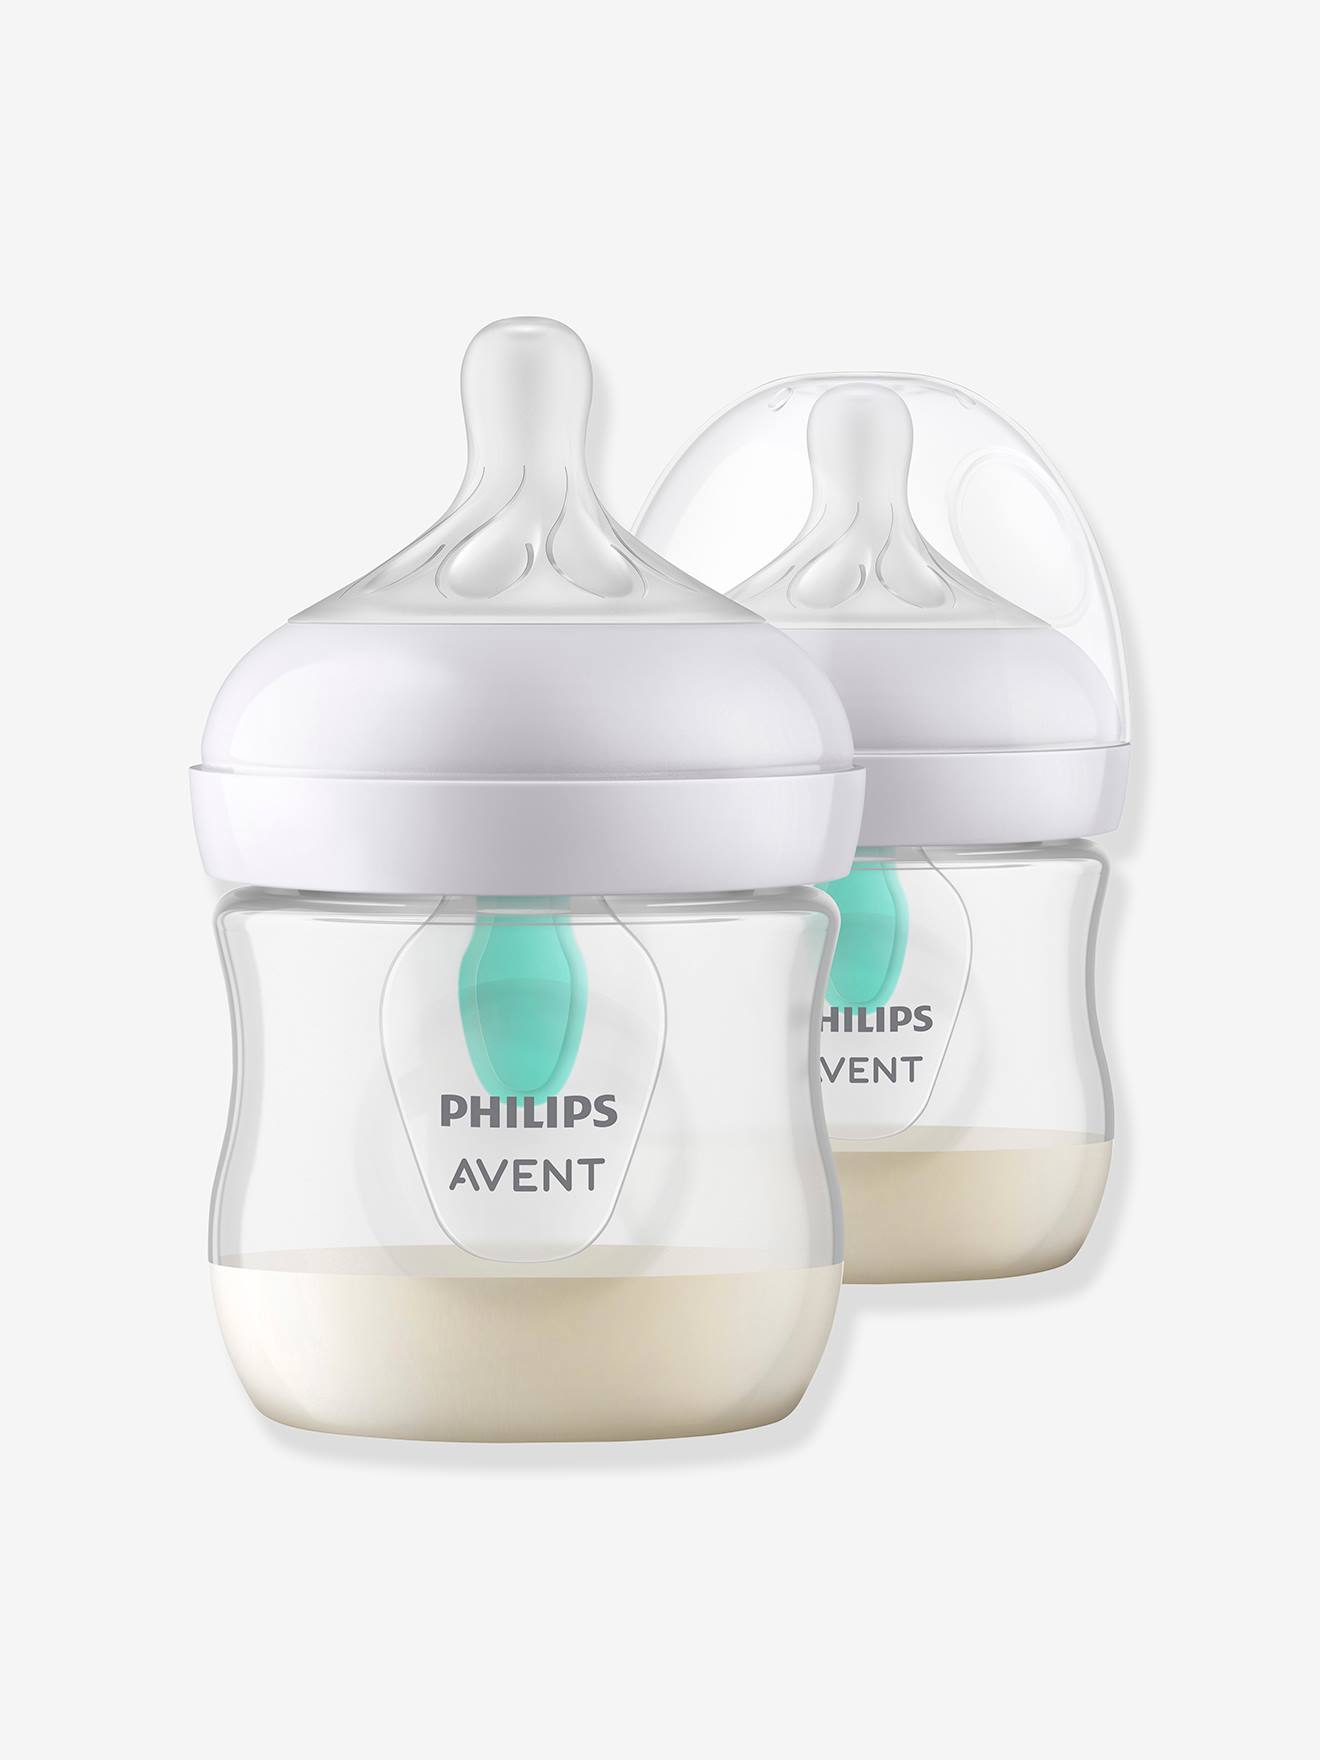 Pack de 2 biberones de 125 ml Natural Response AirFree de Philips